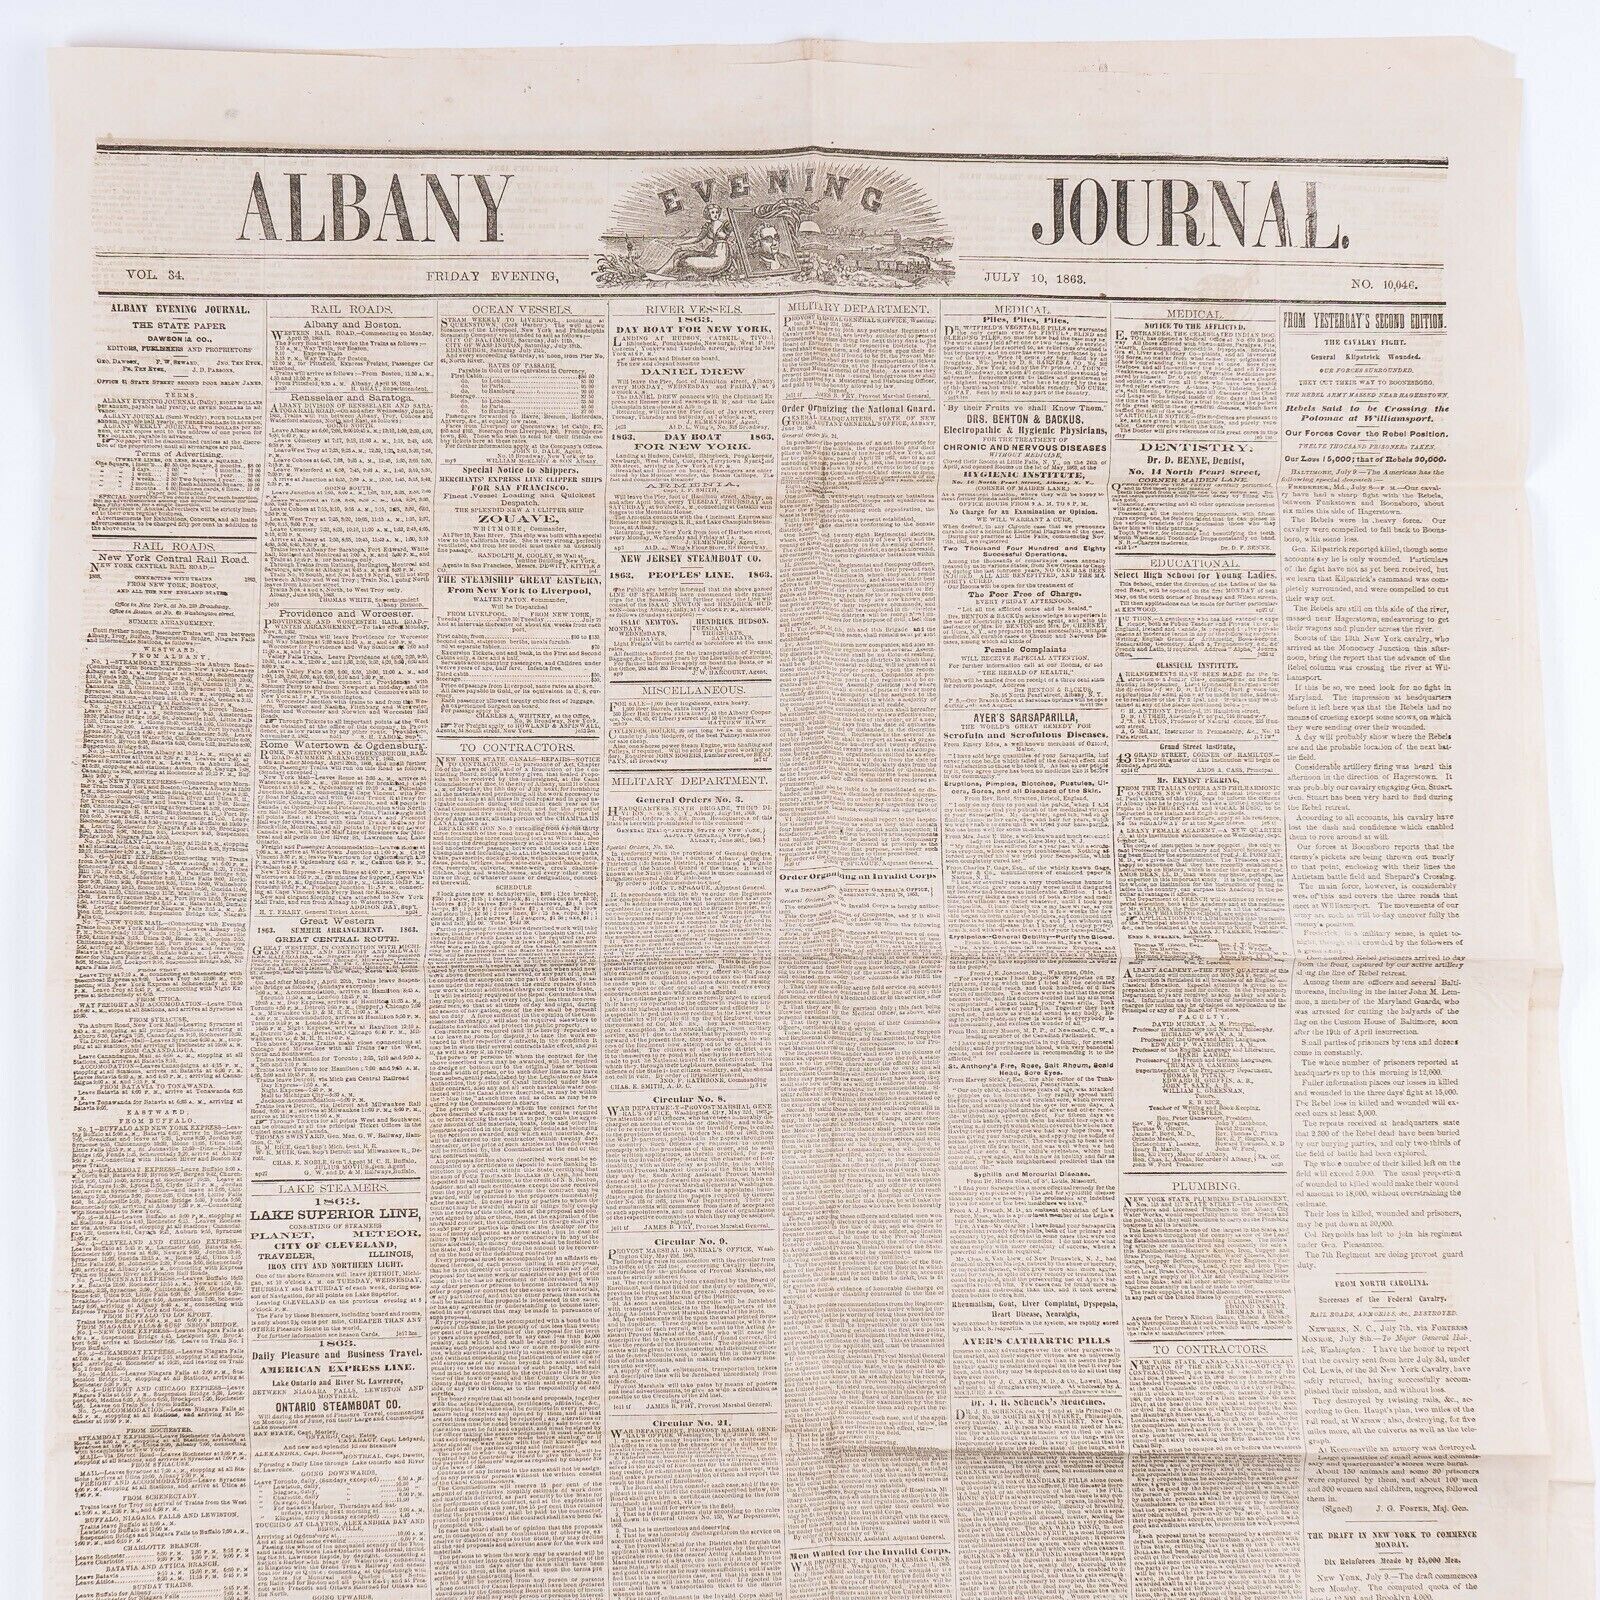 Albany Evening Journal July 10, 1863 Civil War Newspaper Freedmen Soldiers Valor